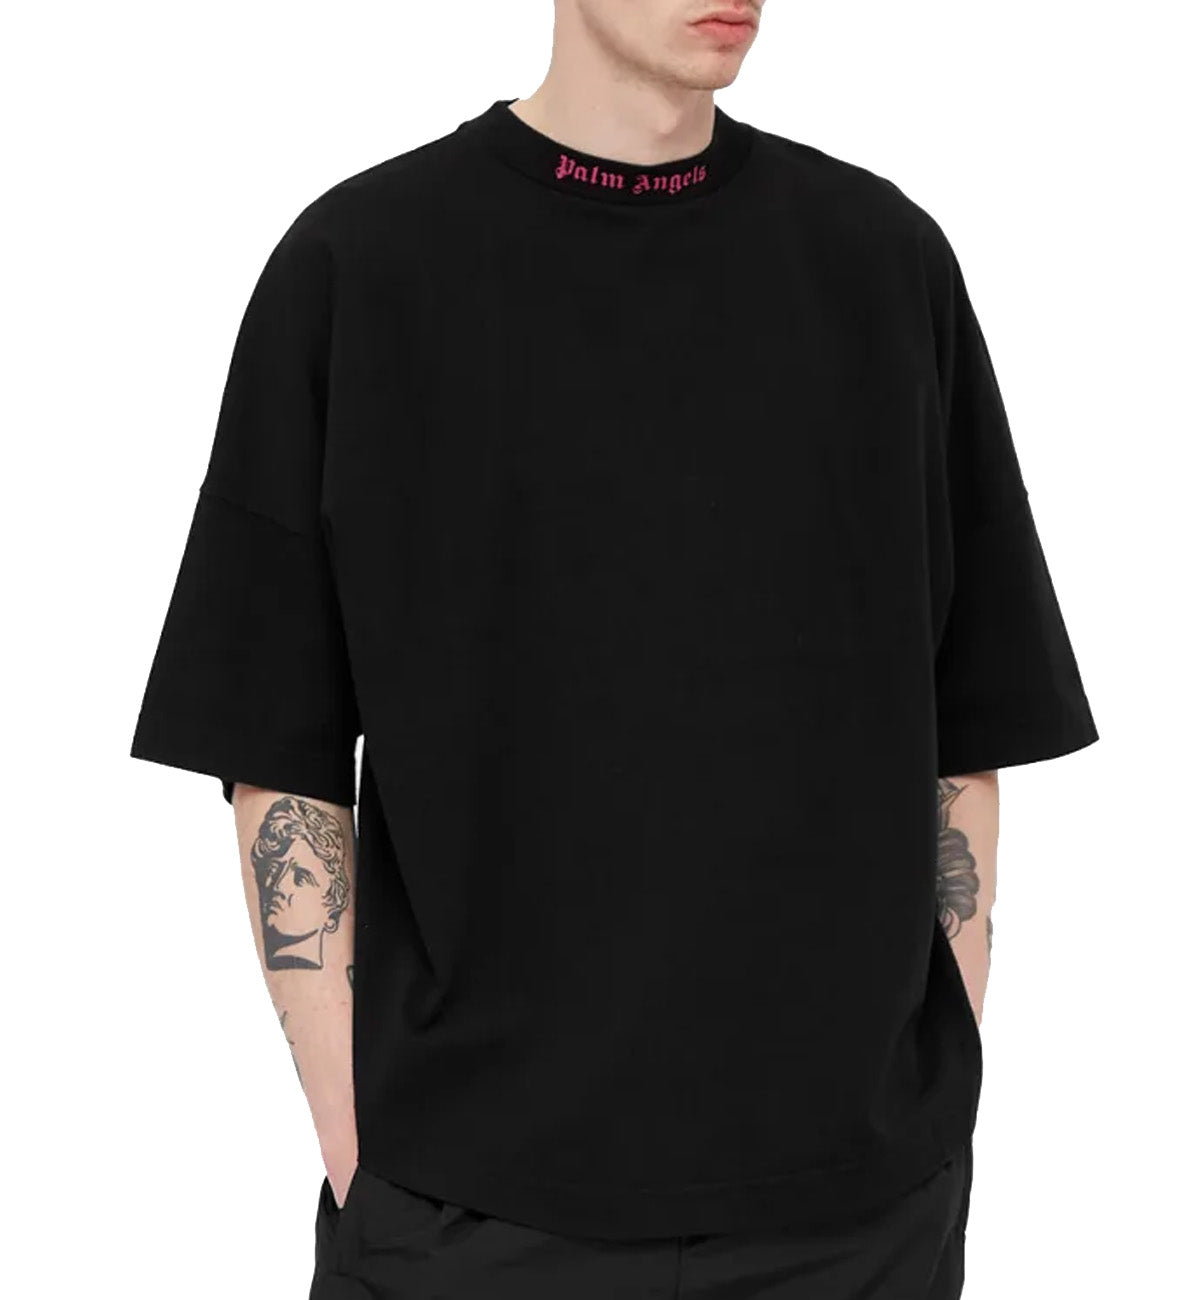 Palm Angels Double Printed Oversize T-Shirt (Black & Fuchia)